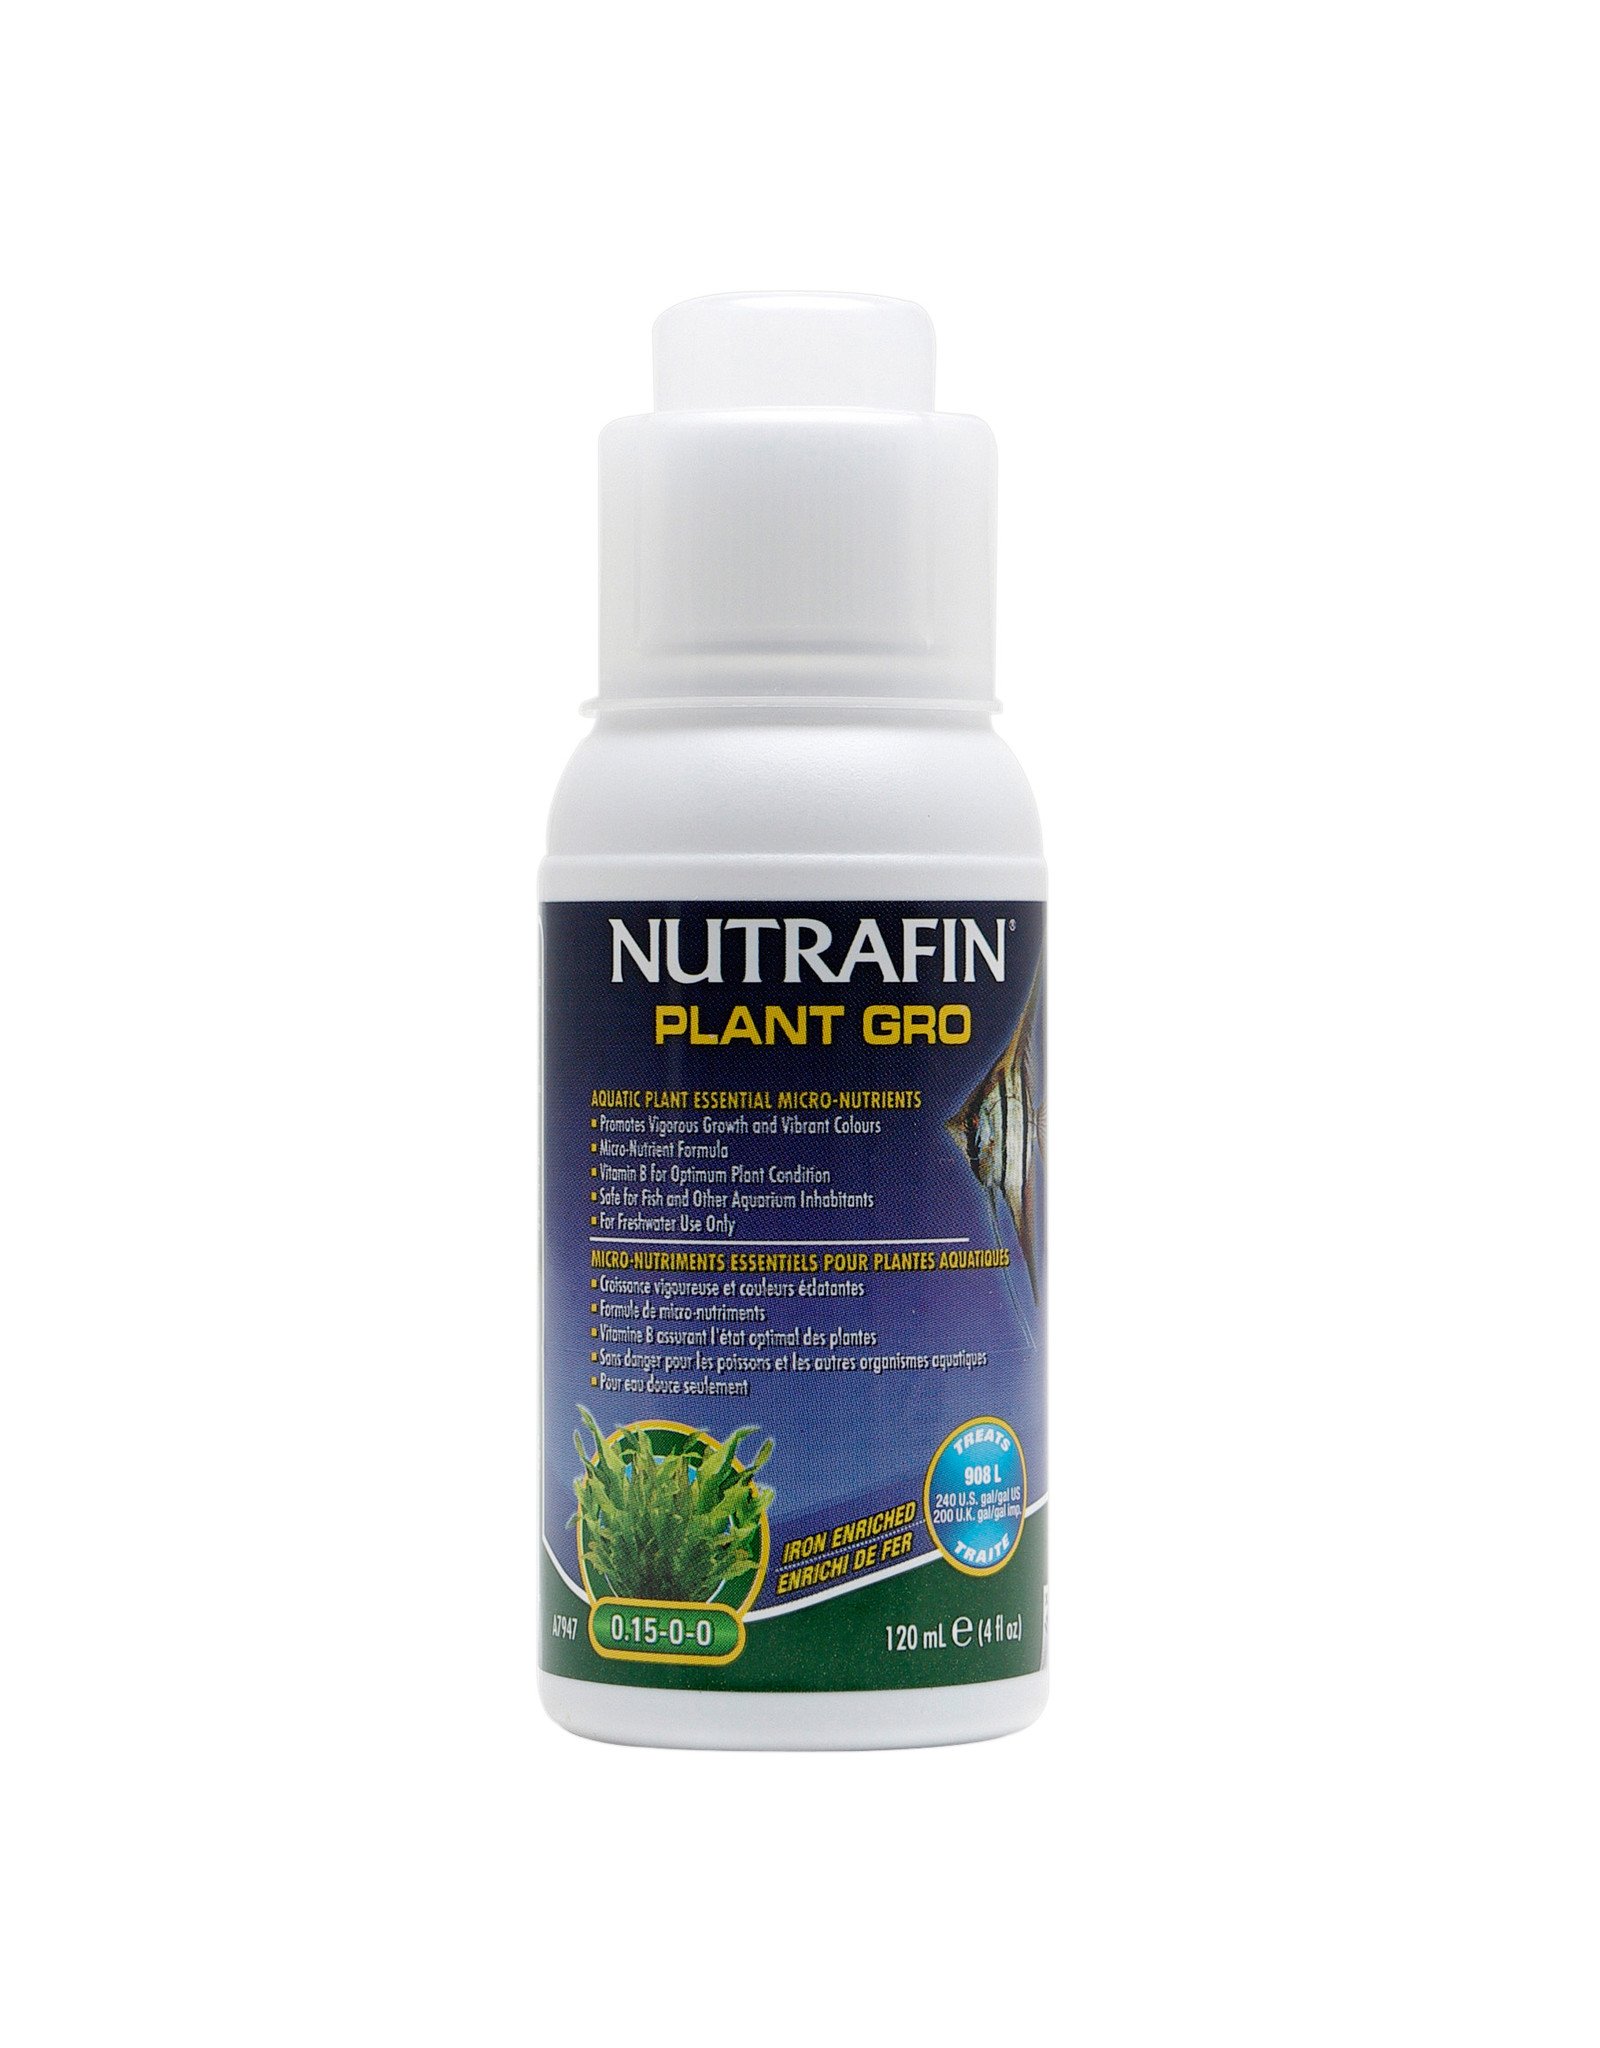 NutraFin NUTRAFIN Plant Gro Aquatic Plant Essential Micro-Nutrient